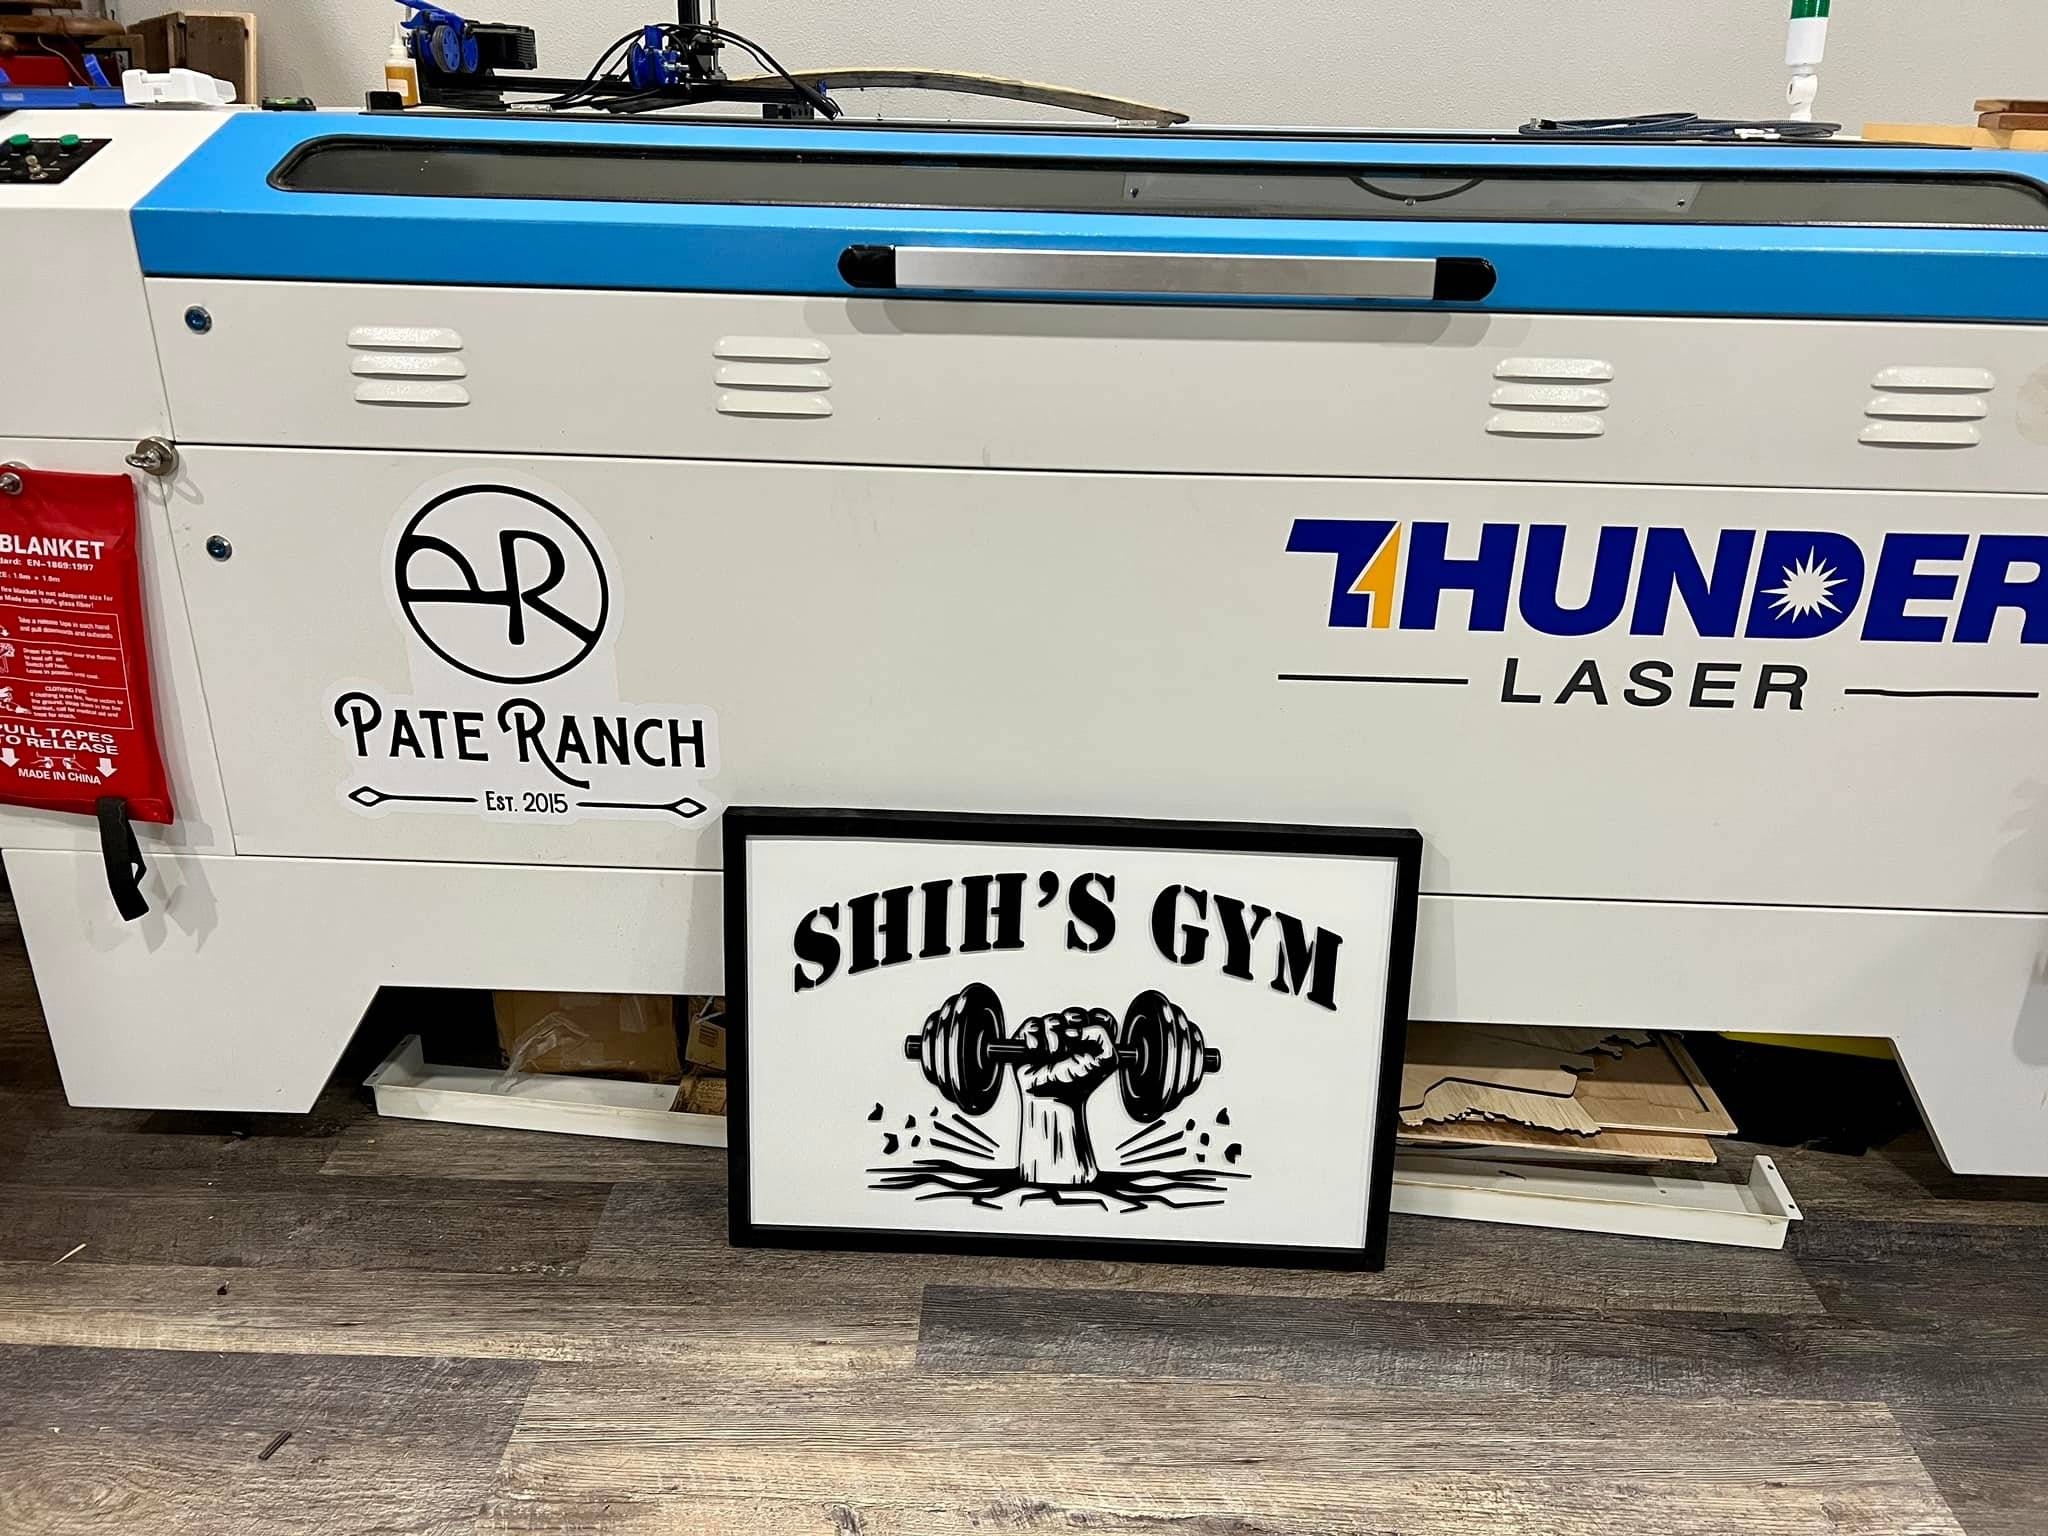 Gym logo created using ThunderLaser laser printing equipment